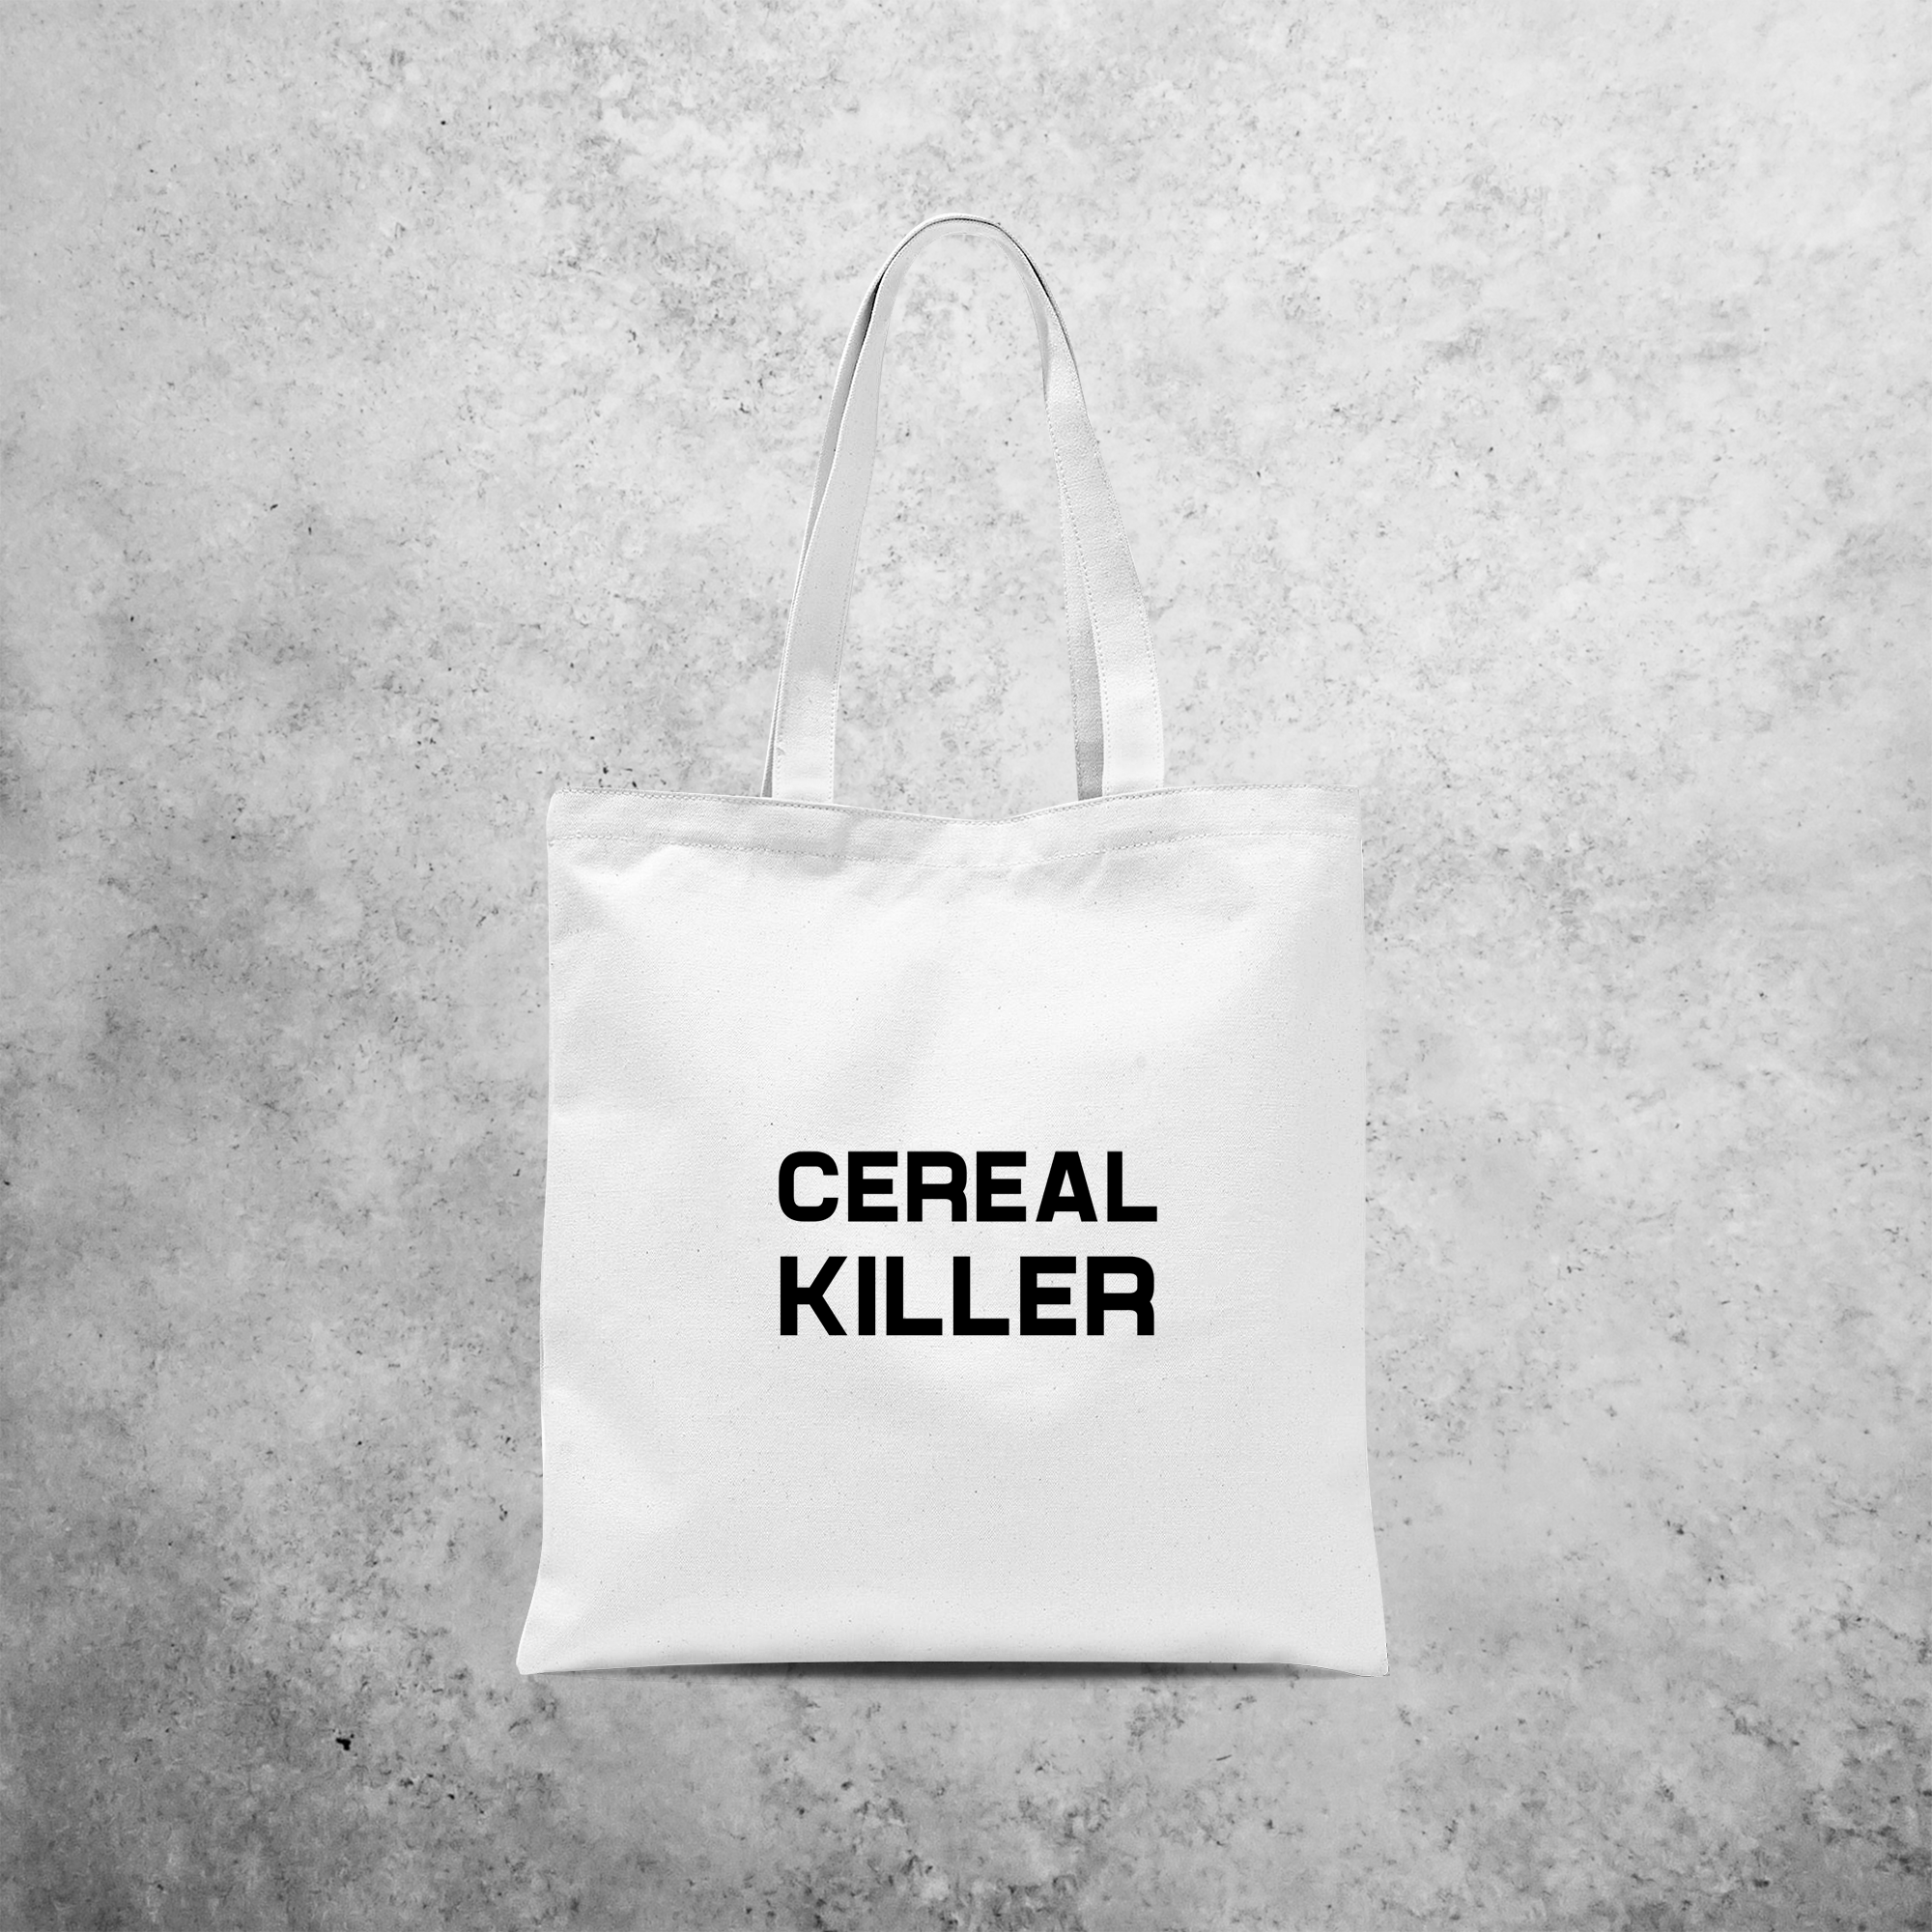 'Cereal killer' tote bag